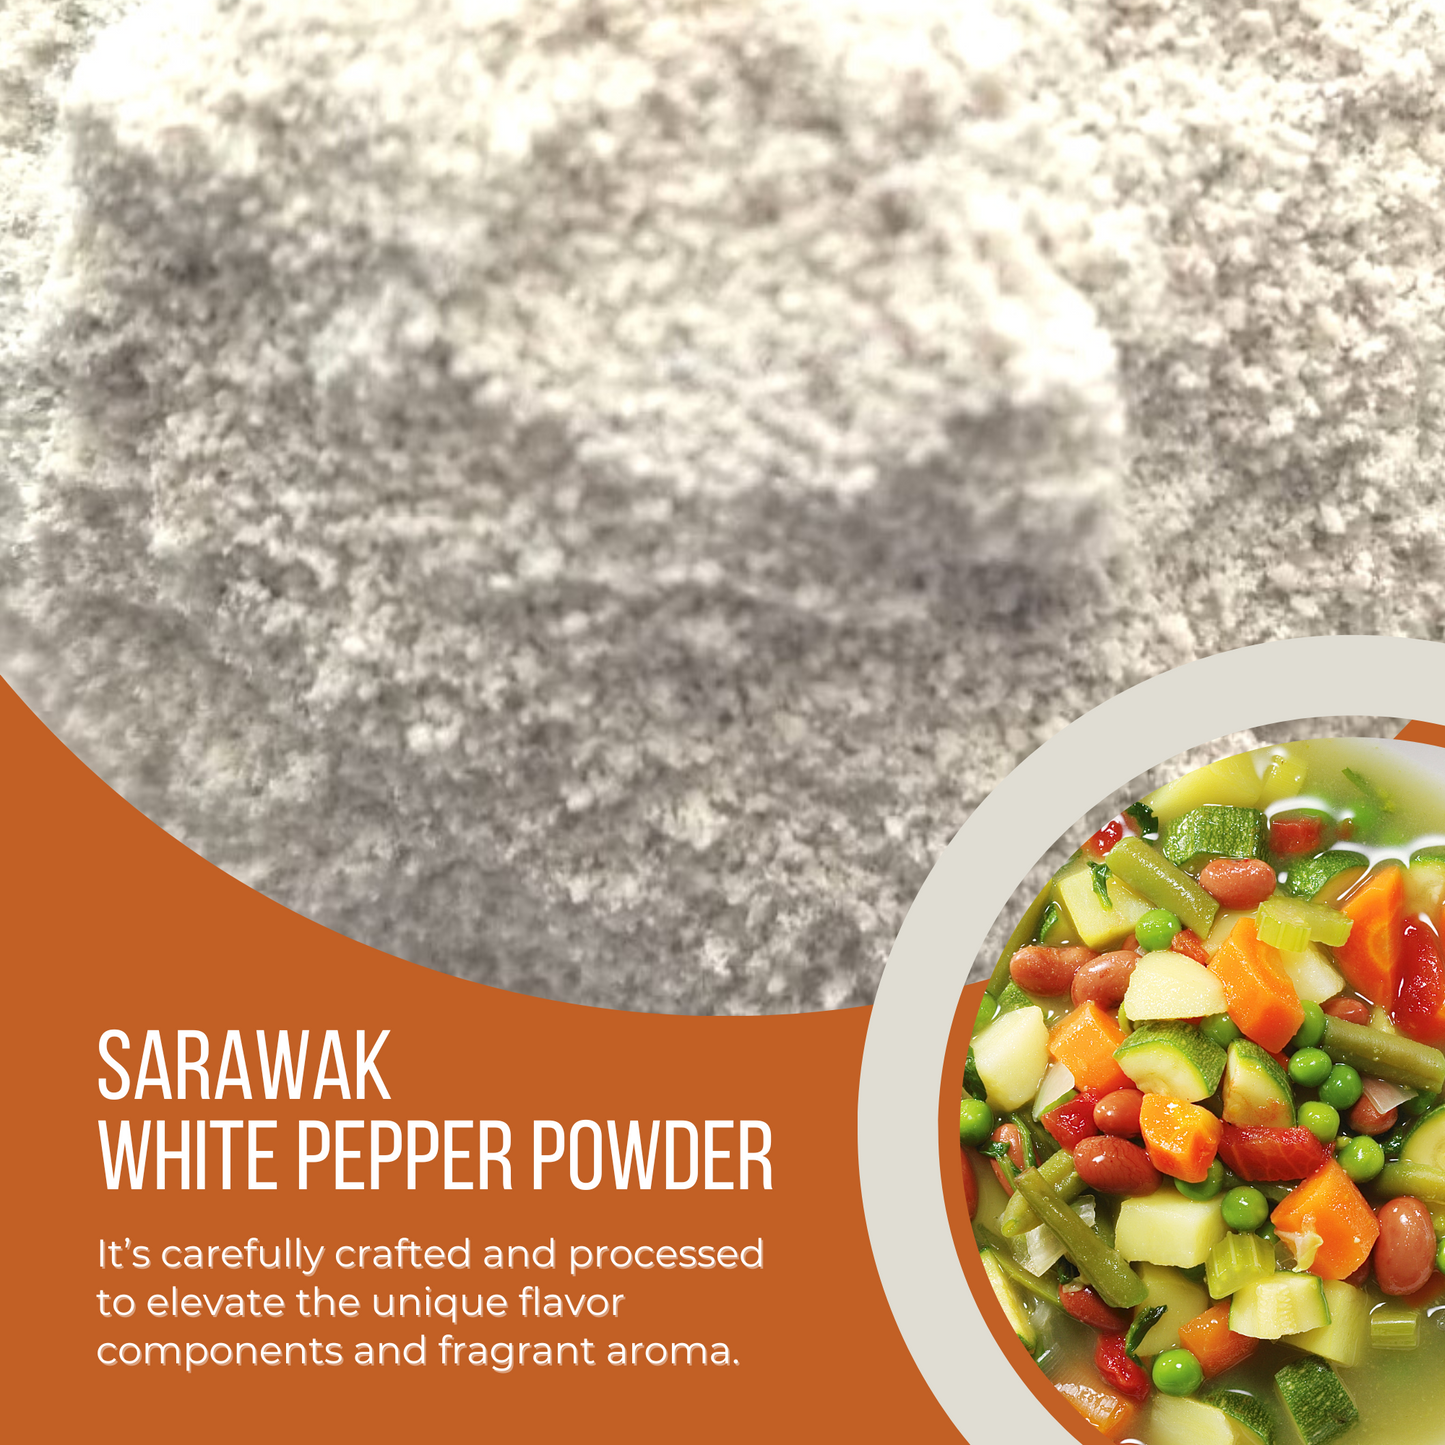 Natharvest Sarawak White Pepper Powder, 5.6 oz (160 gm)